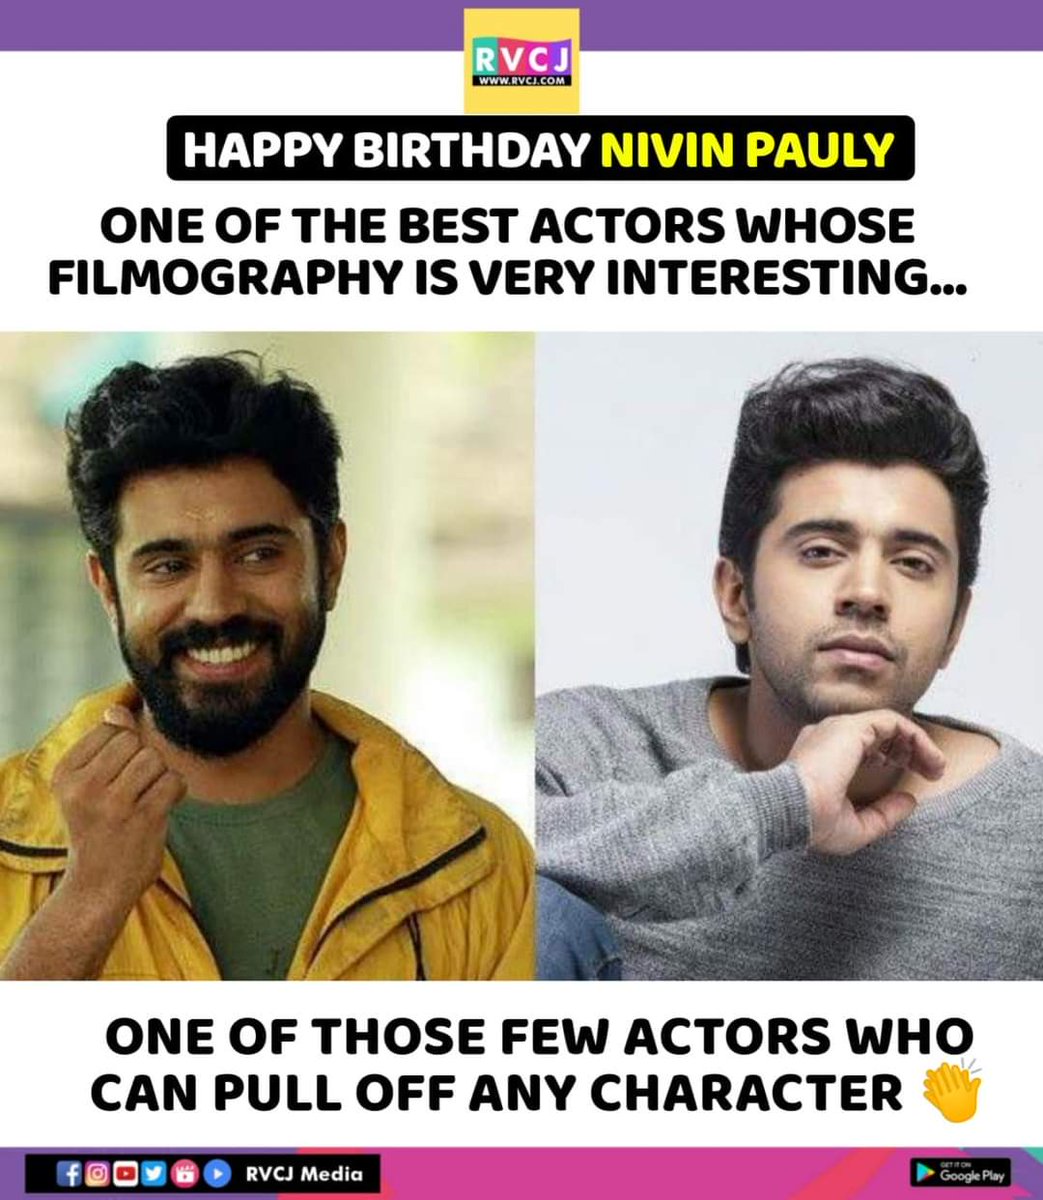 Happy Birthday @NivinOfficial ❤️

#actor #birthday #filmindustry ##south #malyalam #happybirthdaynivinpauly #rvcjmovies